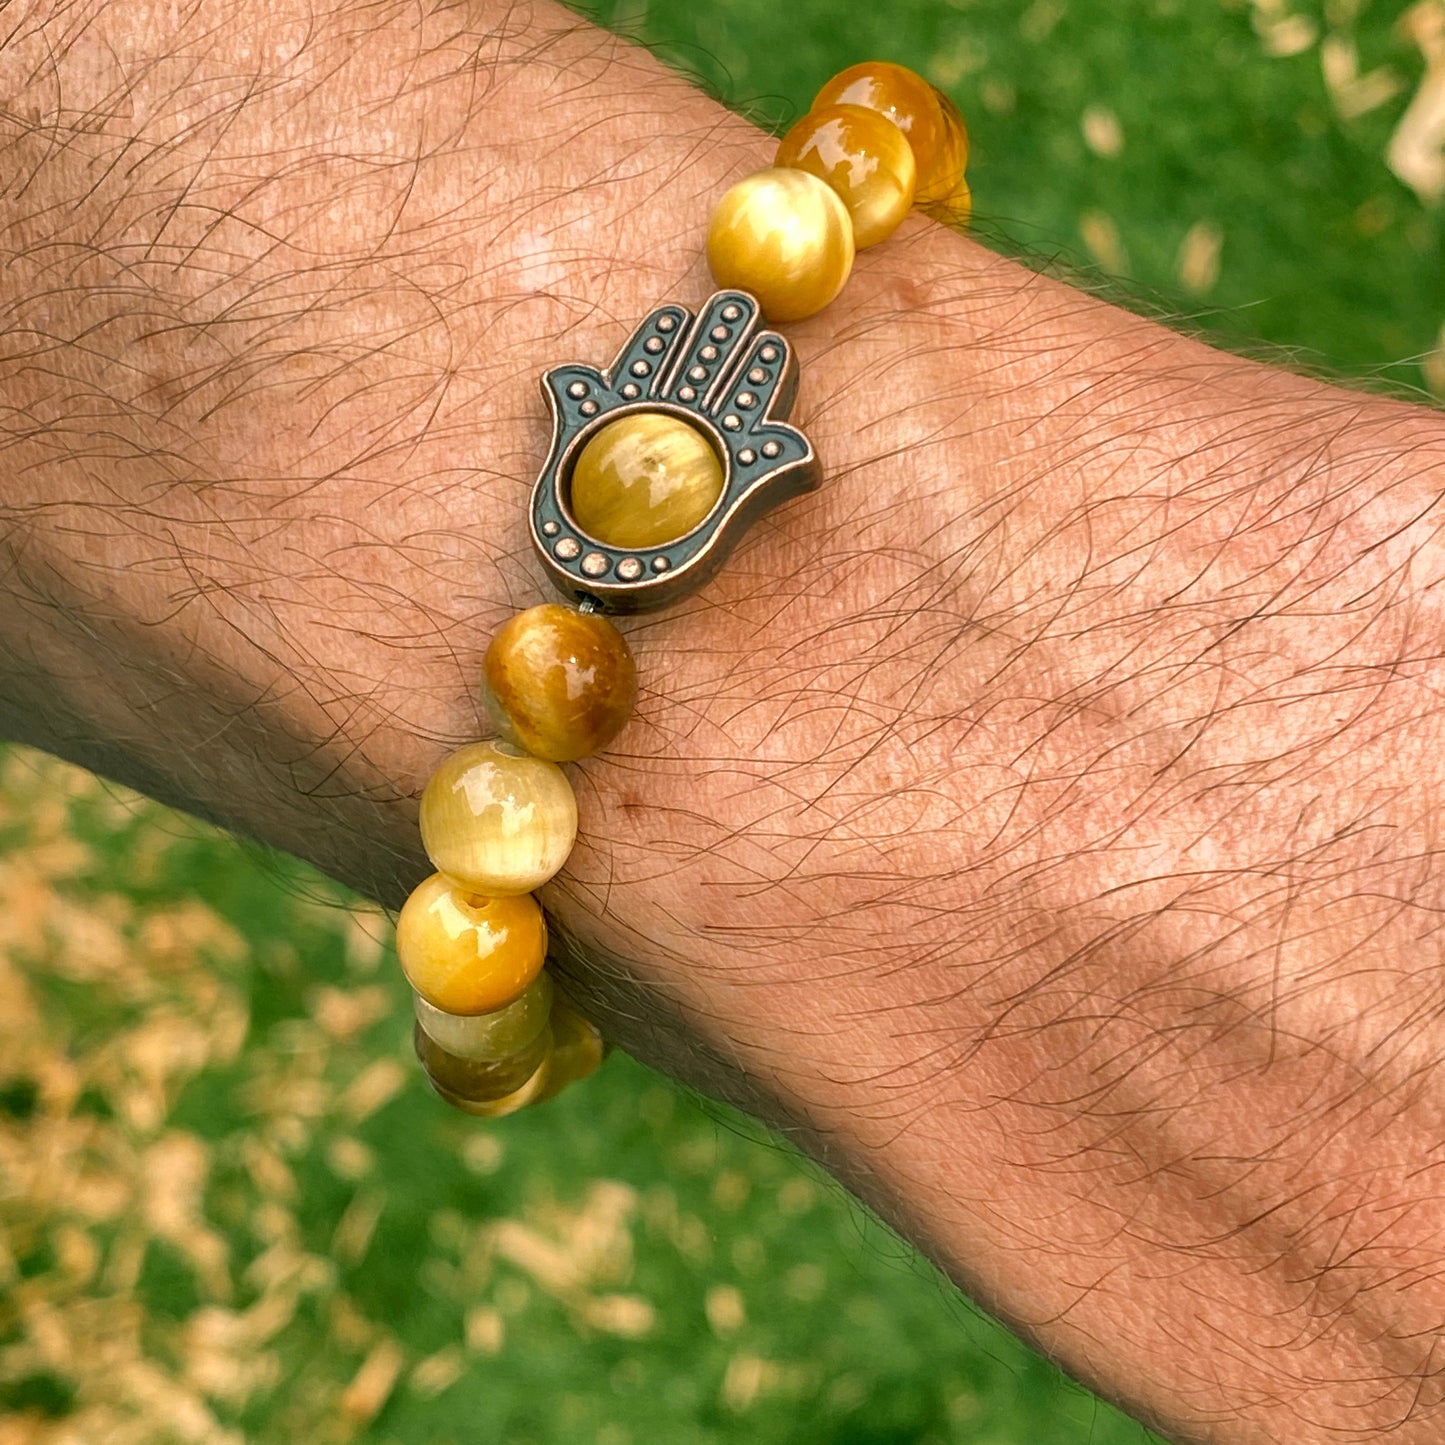 Men's Tiger Eye gemstone and copper Hamsa bracelet.